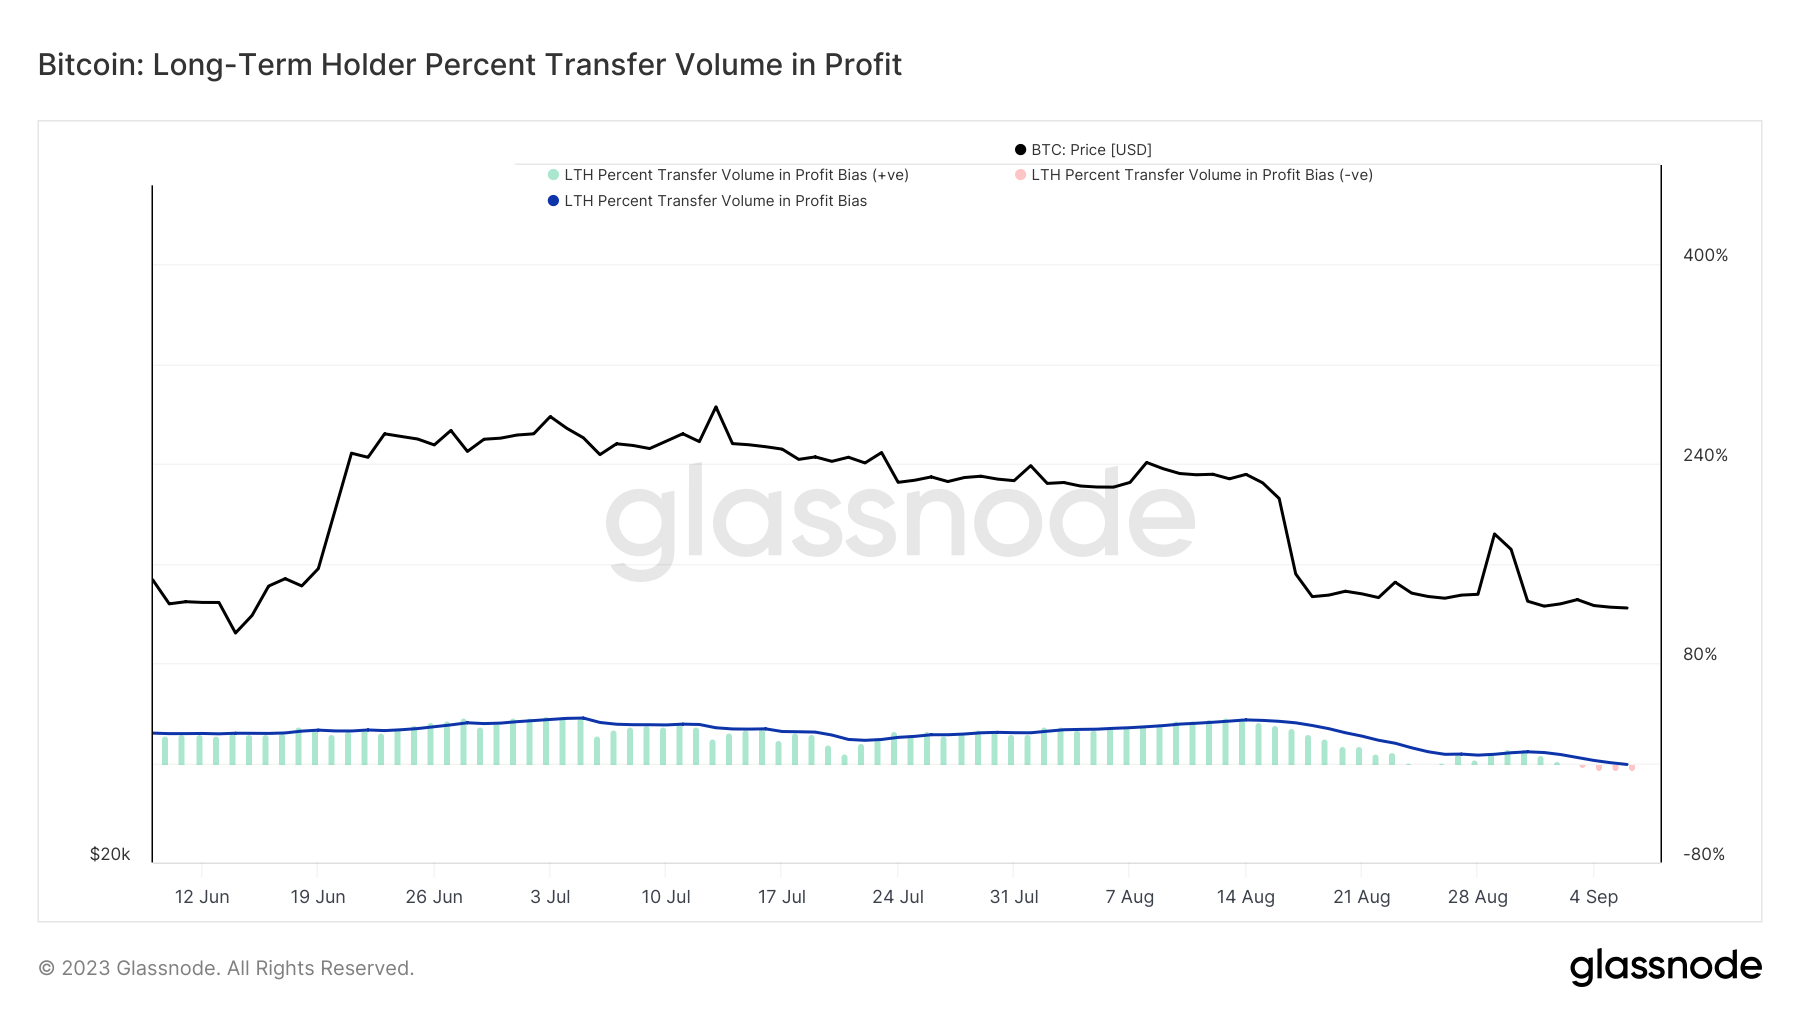 long-term holder percent transfer volume in profit